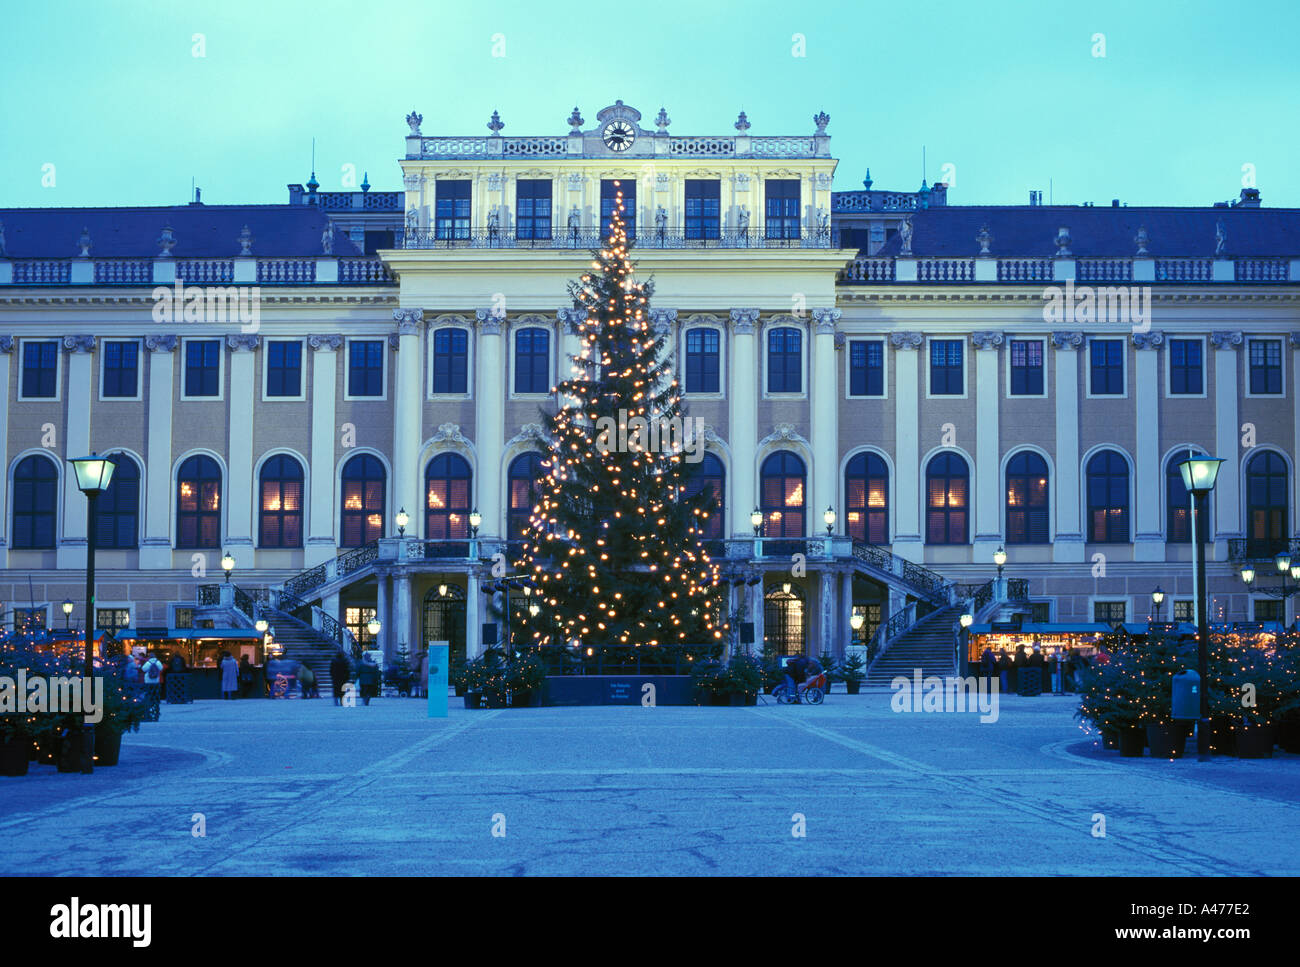 Austria Vienna Schonbrunn Palace Christmas Market Stock Photo: 292834